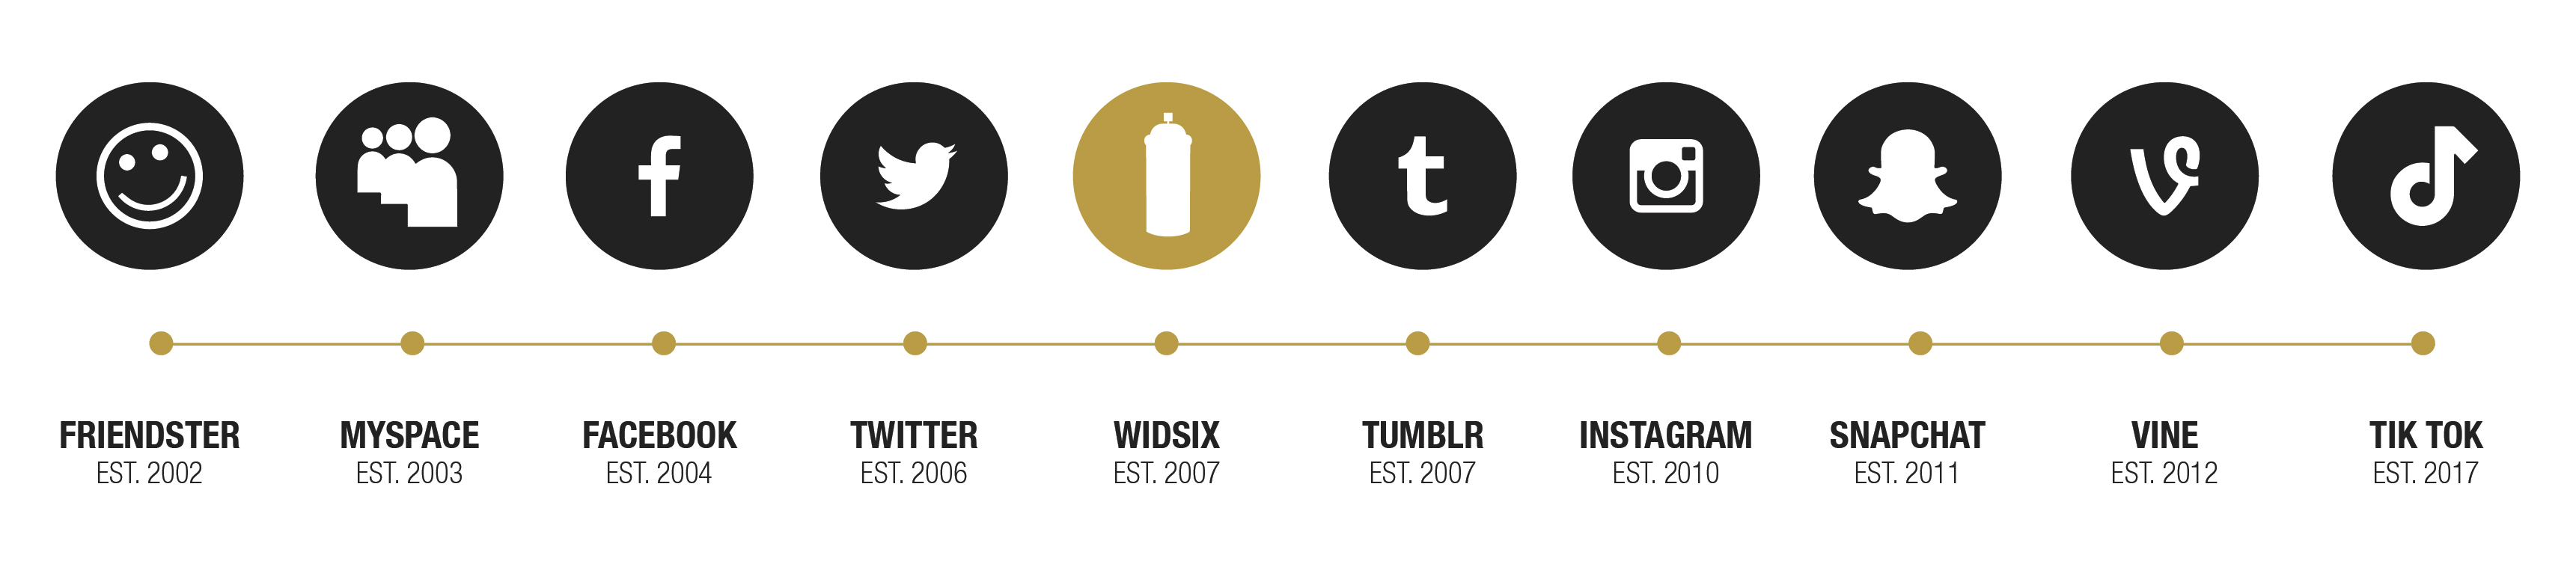 WIDSIX-Social-Media-History-Timeline